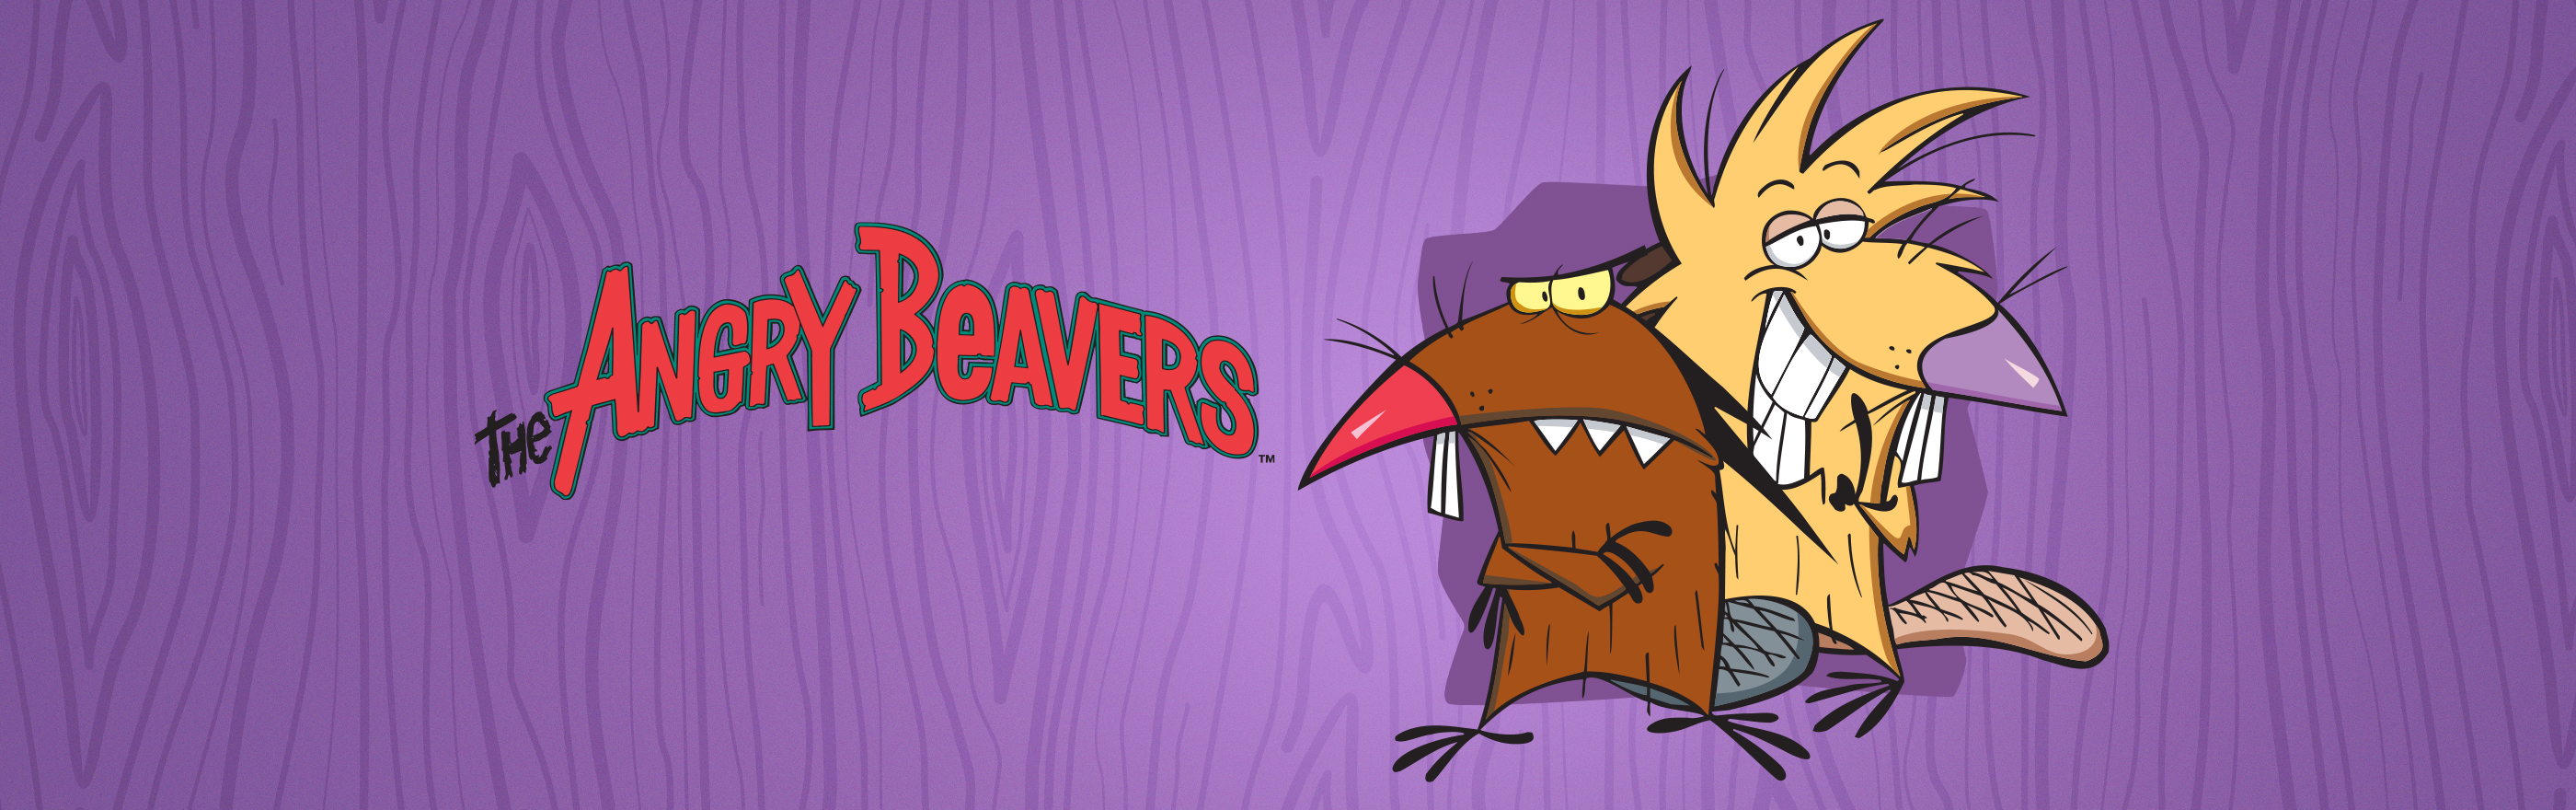 The Angry Beavers LOGO